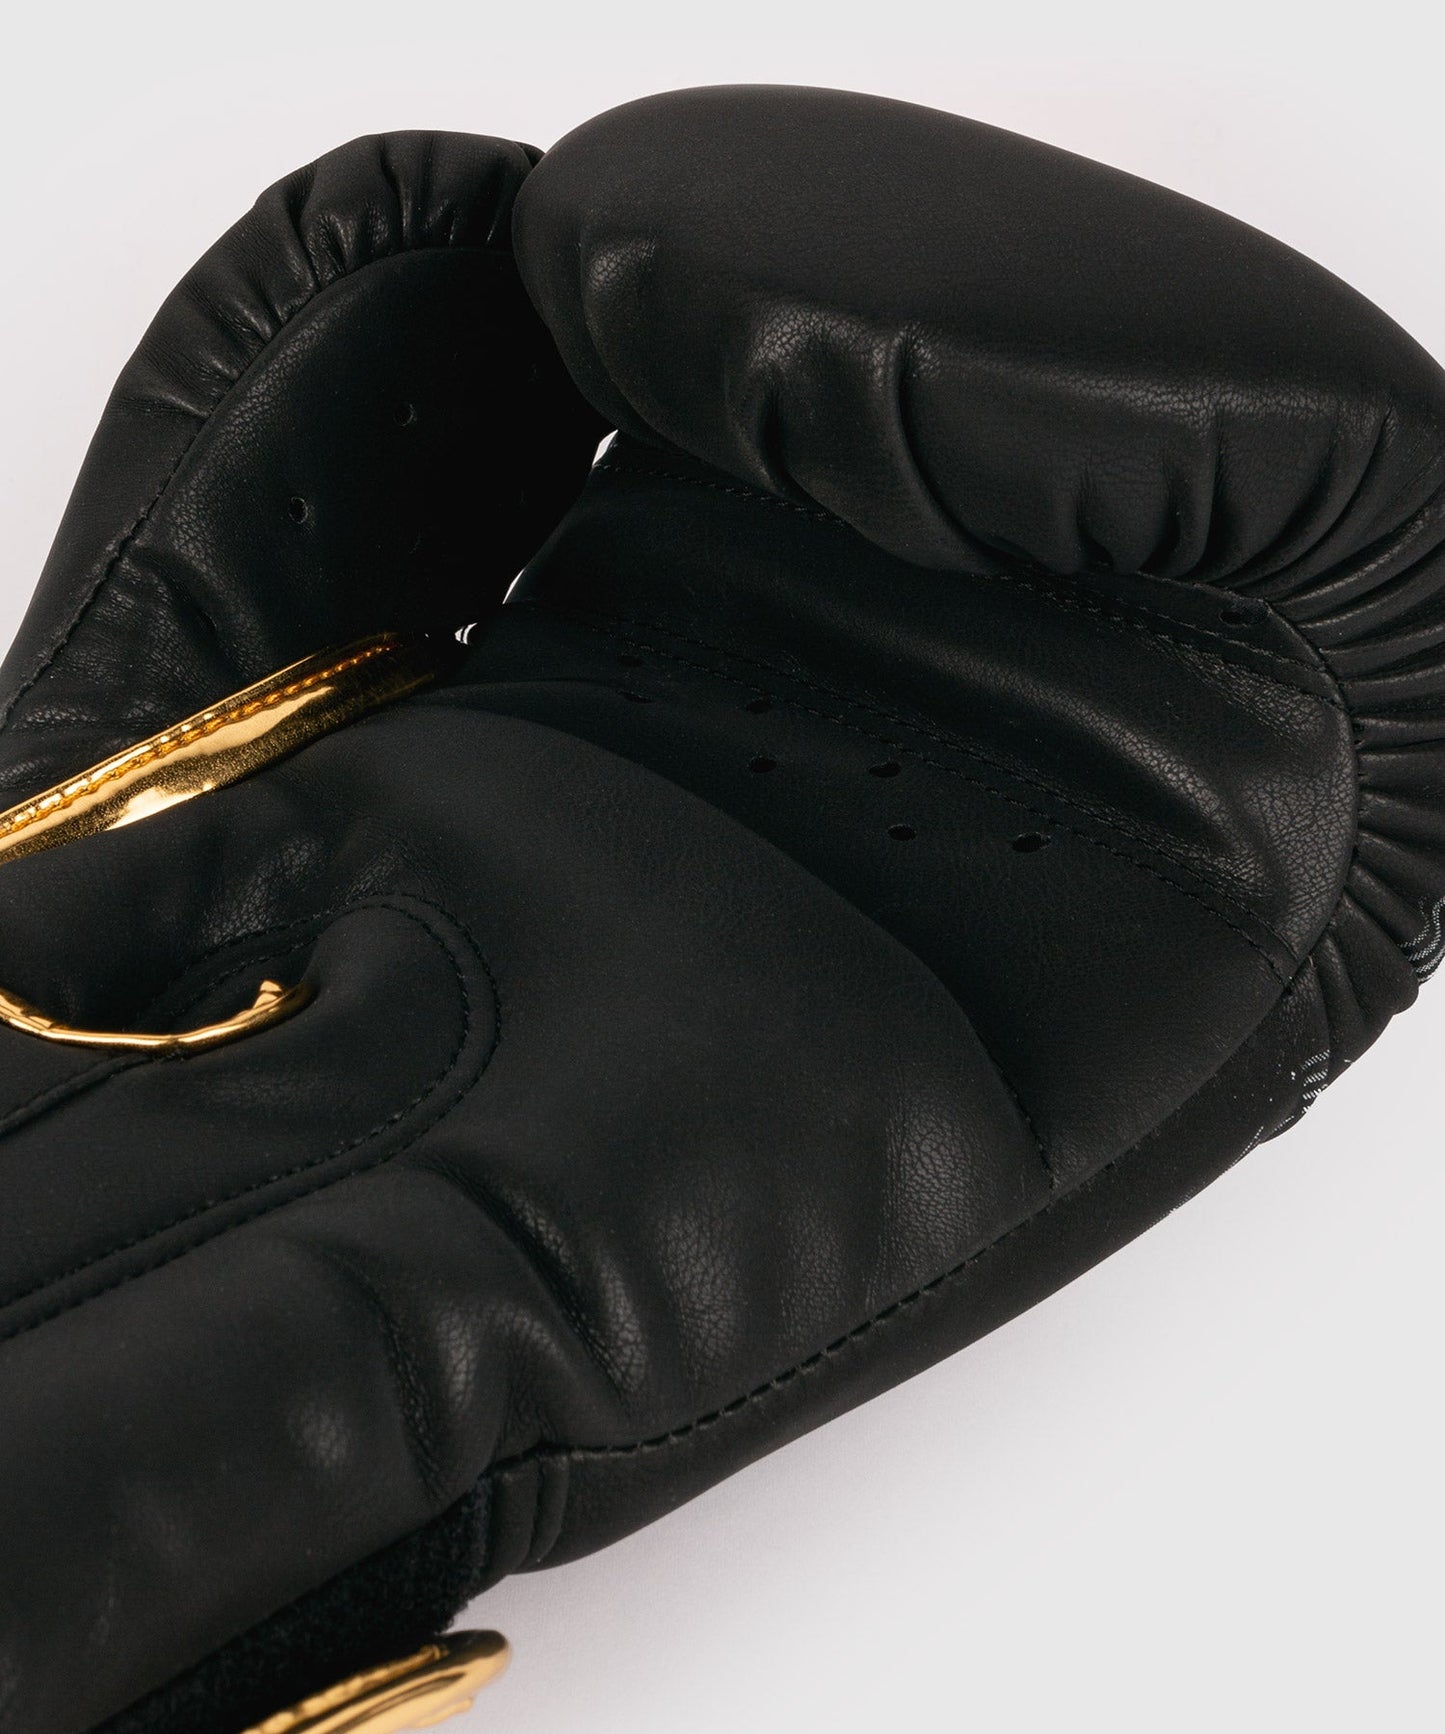 Venum Skull Boxing gloves - Black